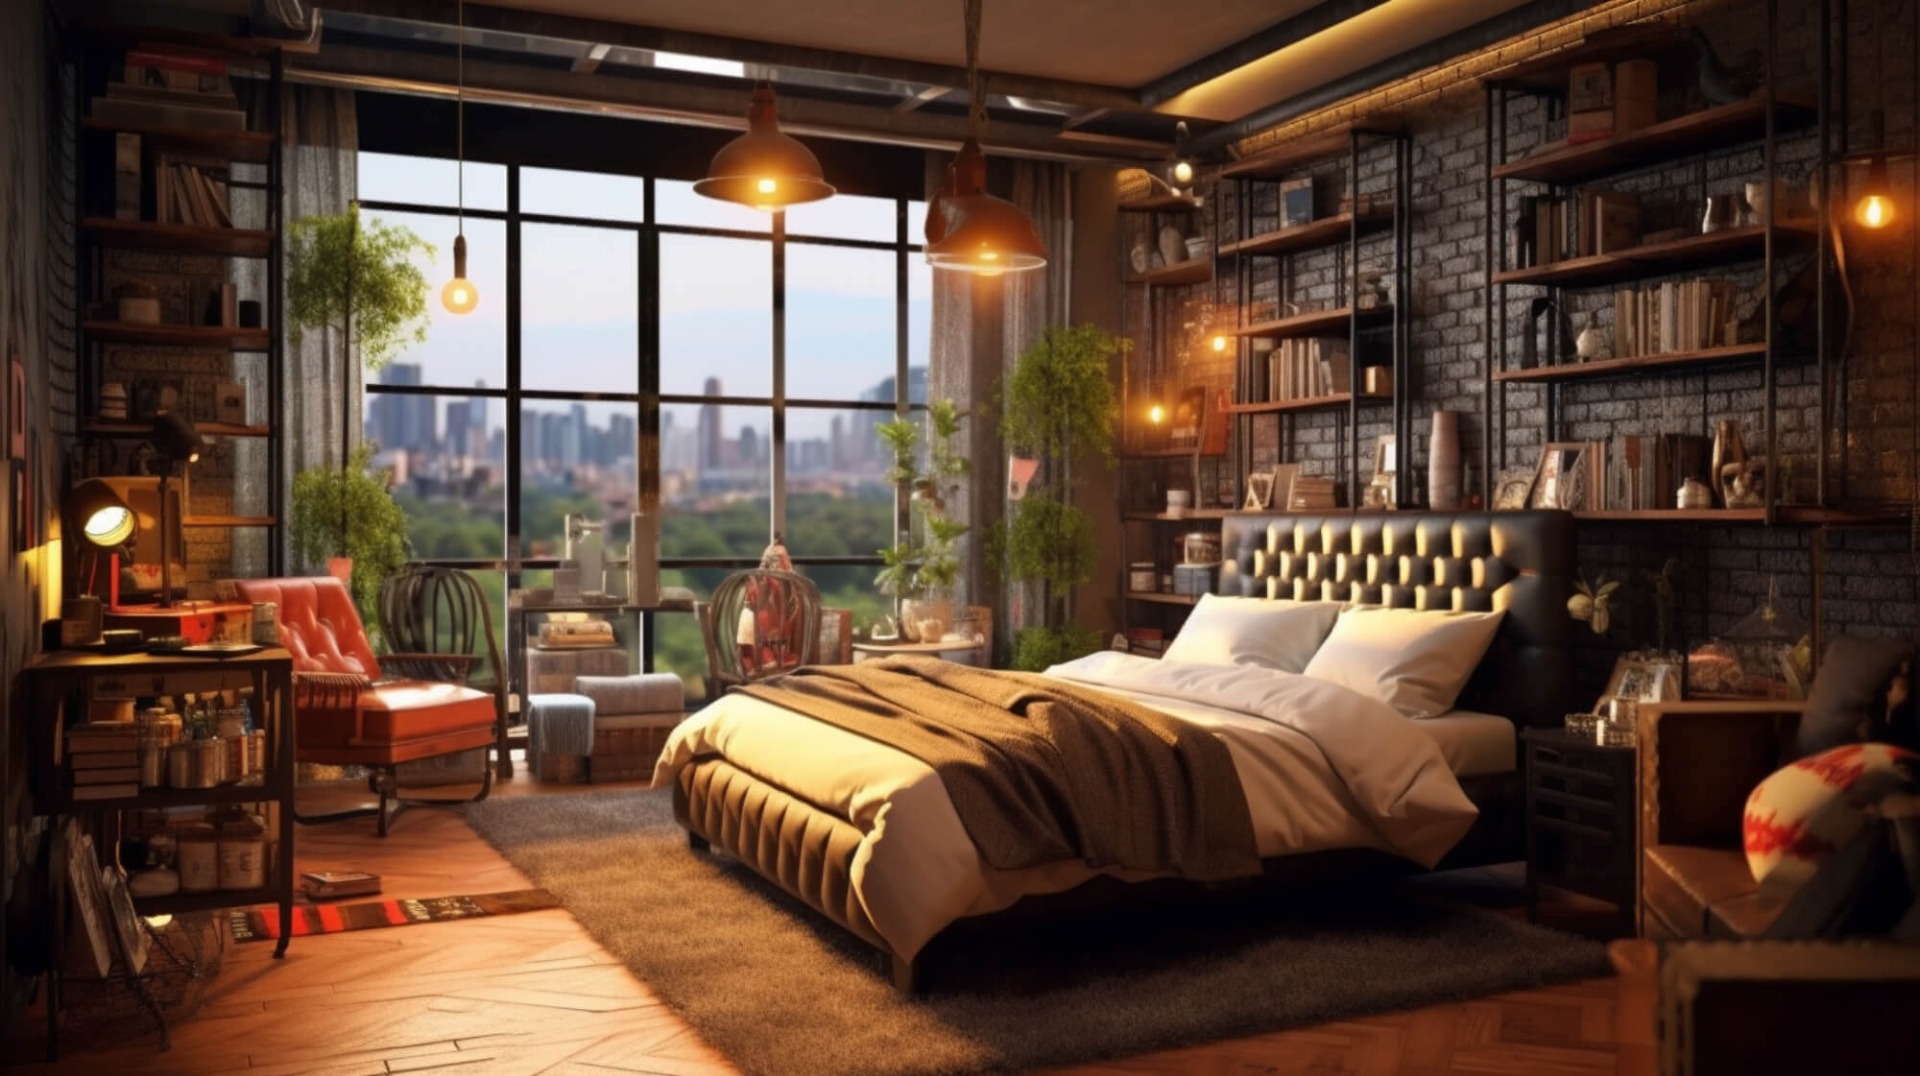 Hestya-online-interior-design-design-a-cozy-and-comfortable-couple-bedroom